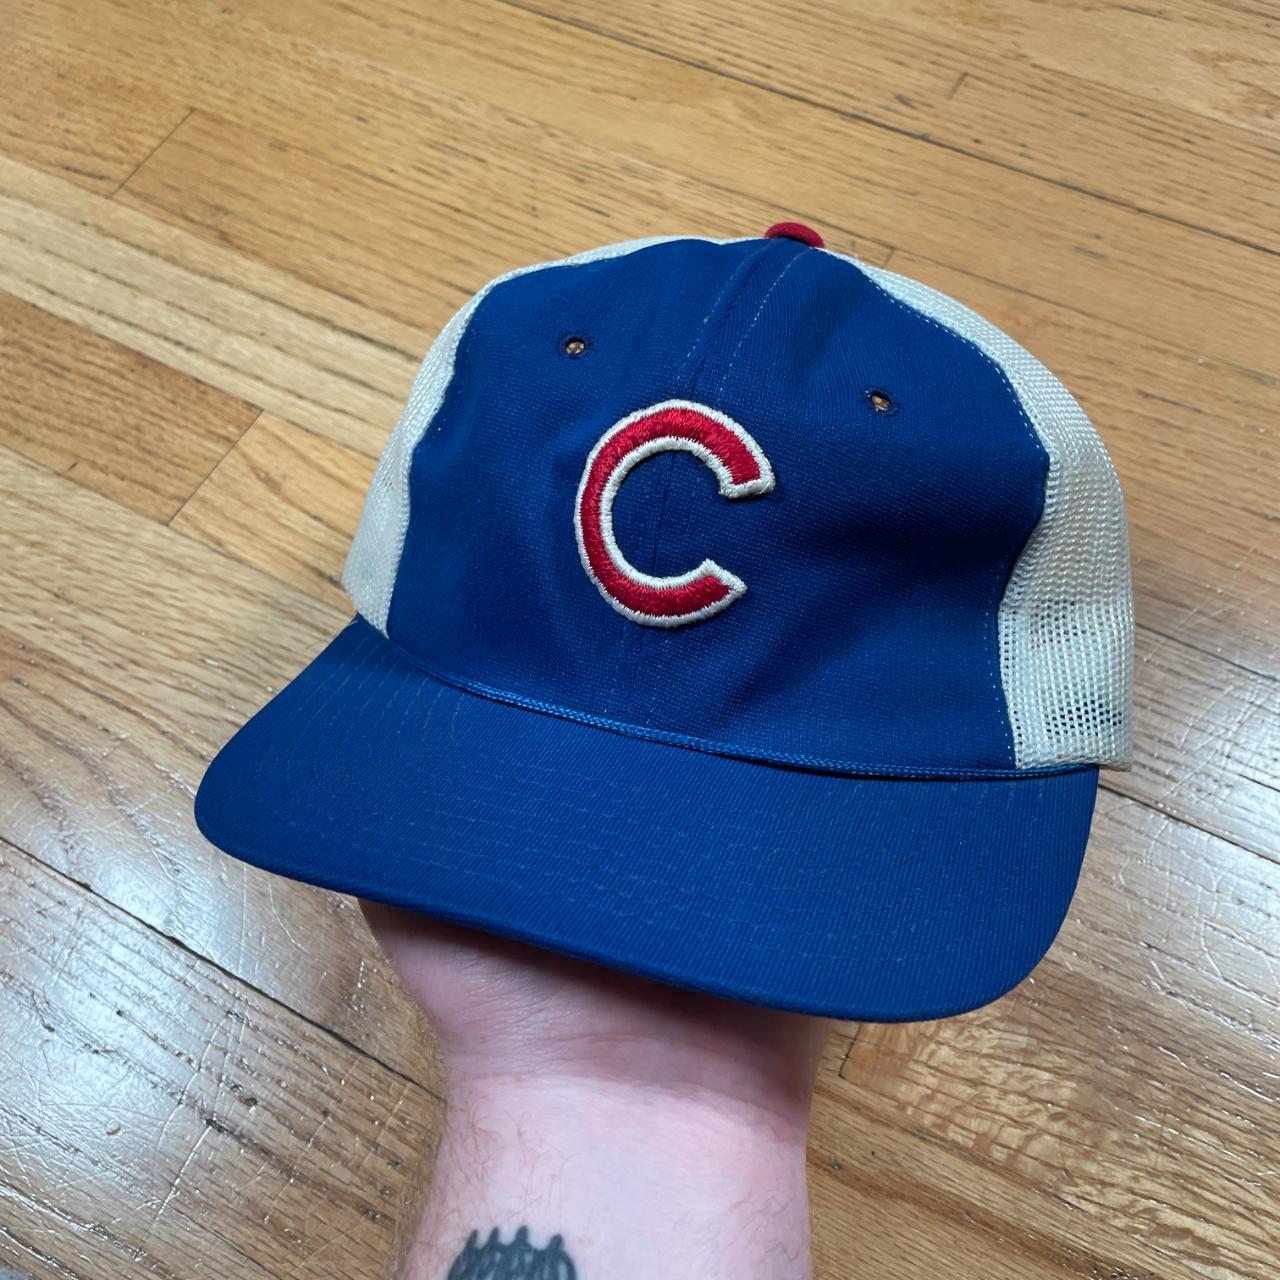 MLB Men's Caps - Blue